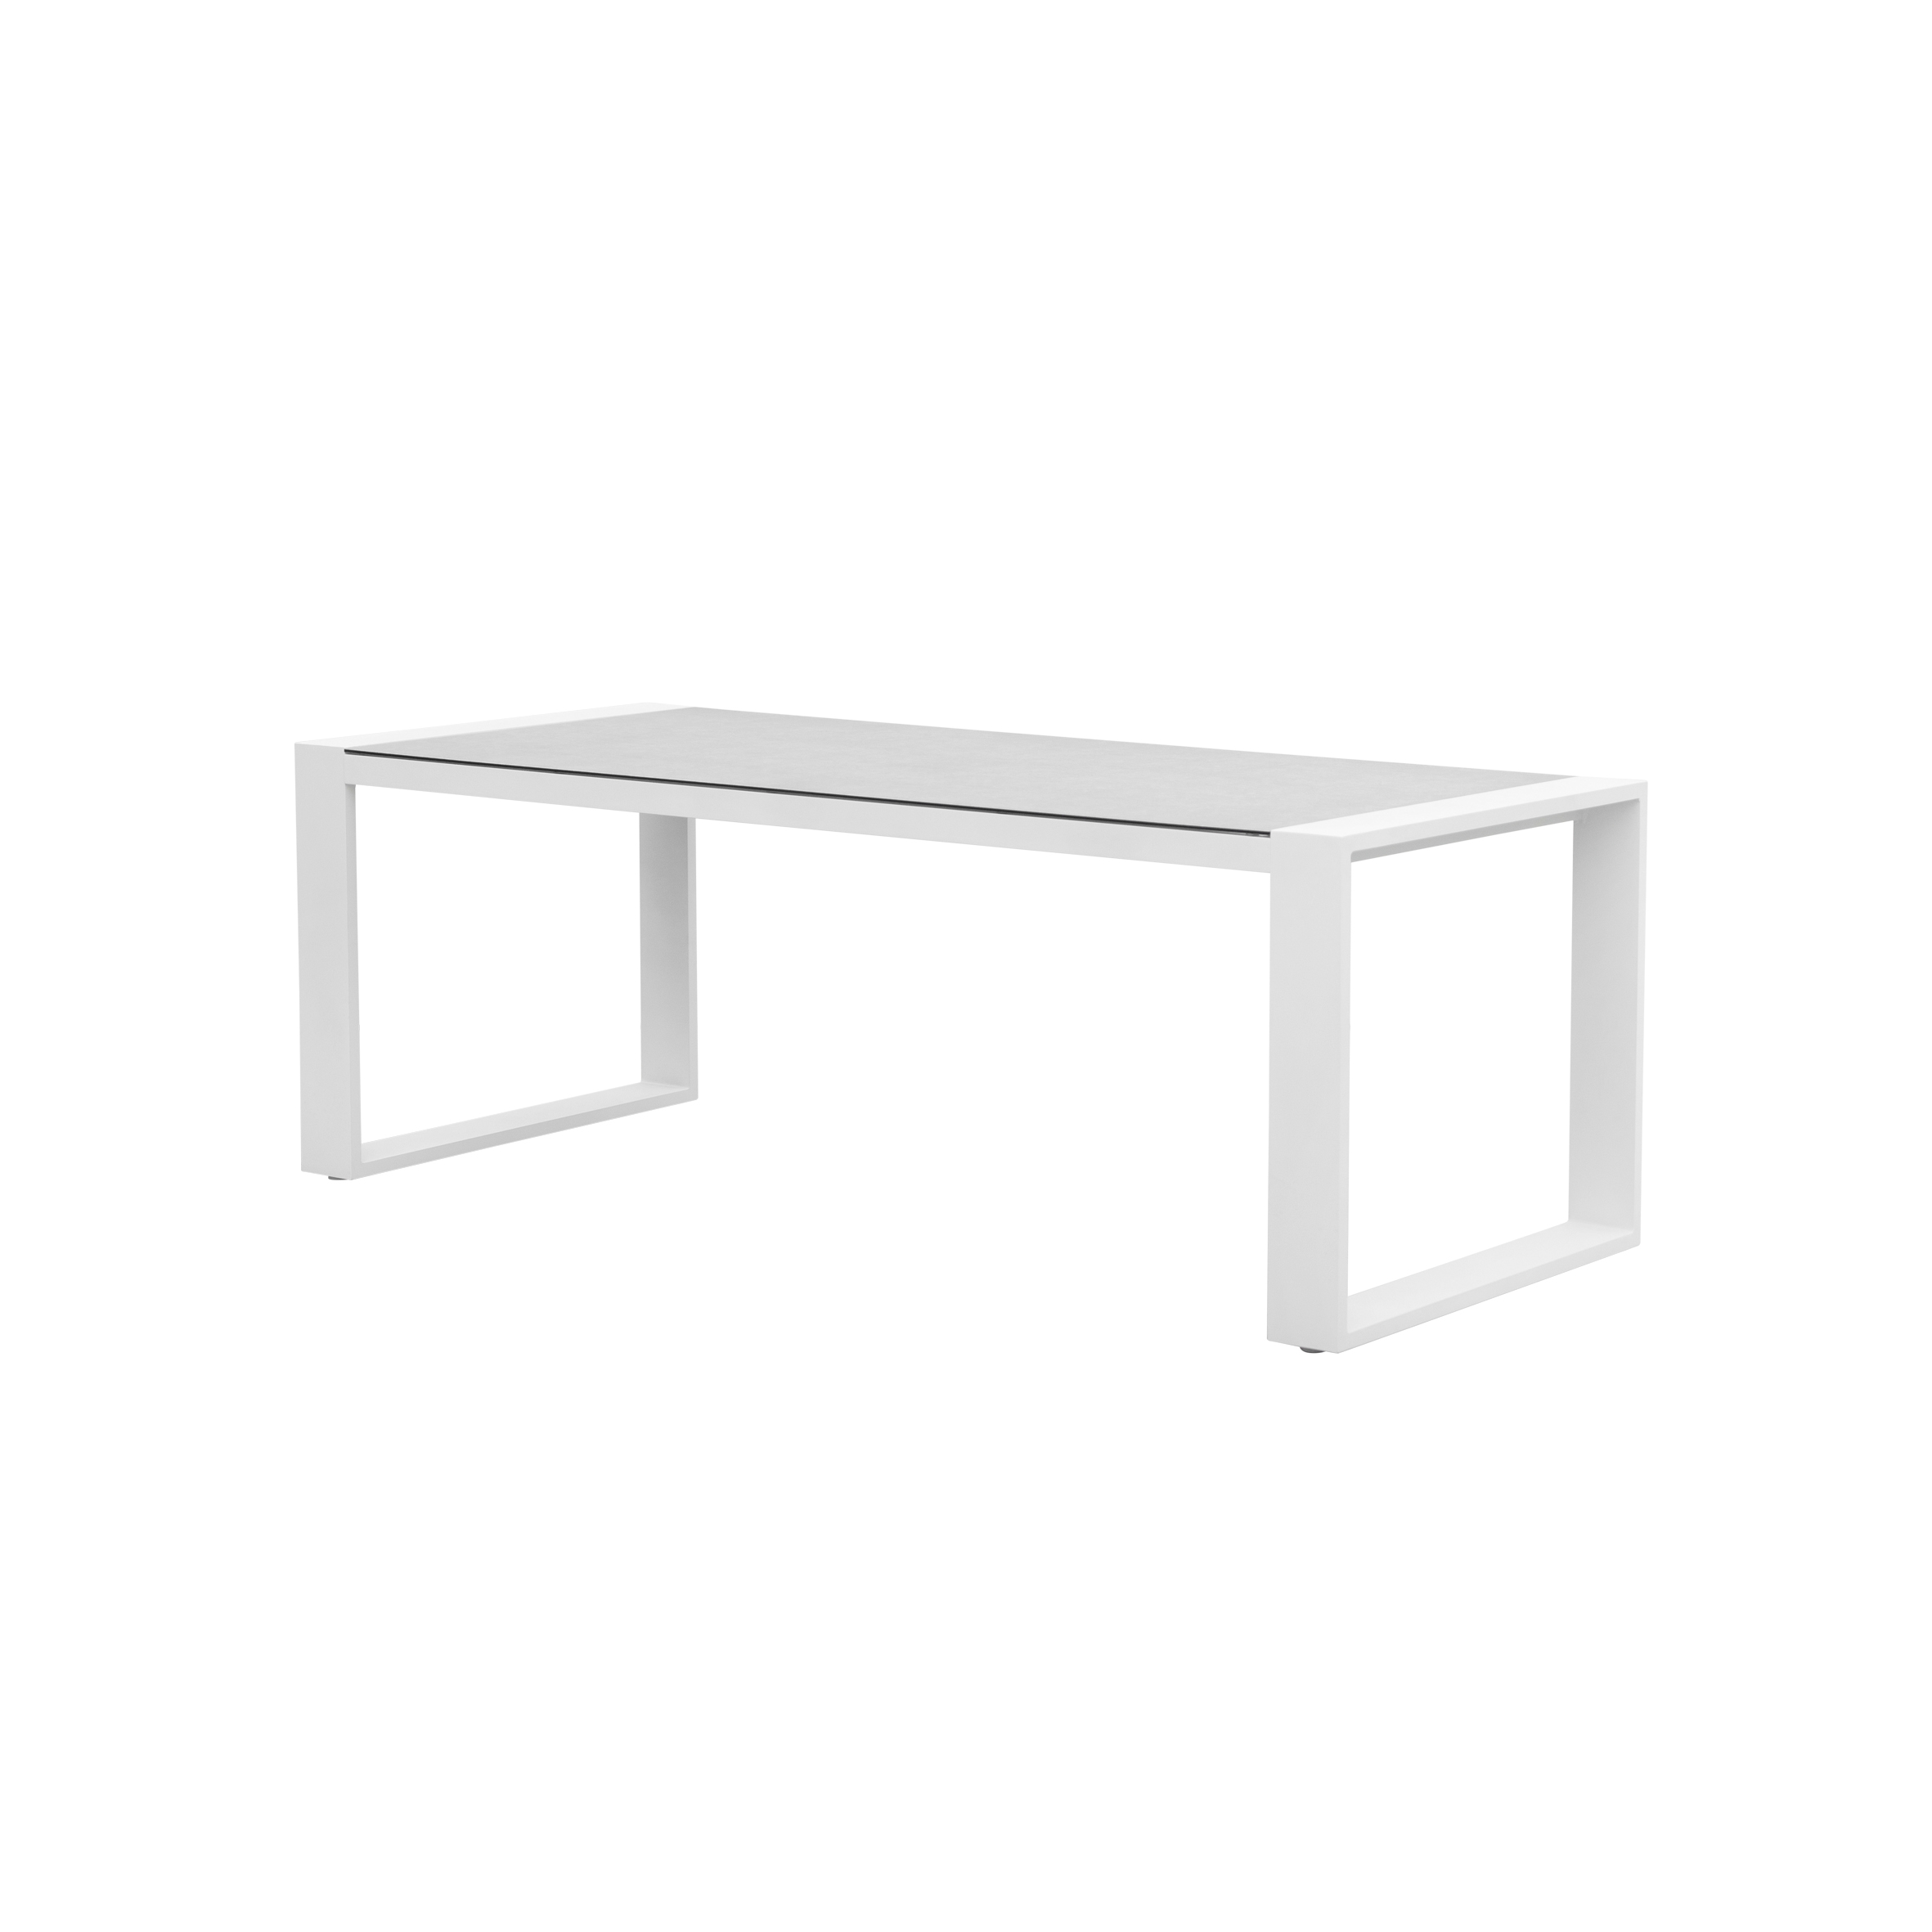 LInz aluminium.stół prostokątny S1